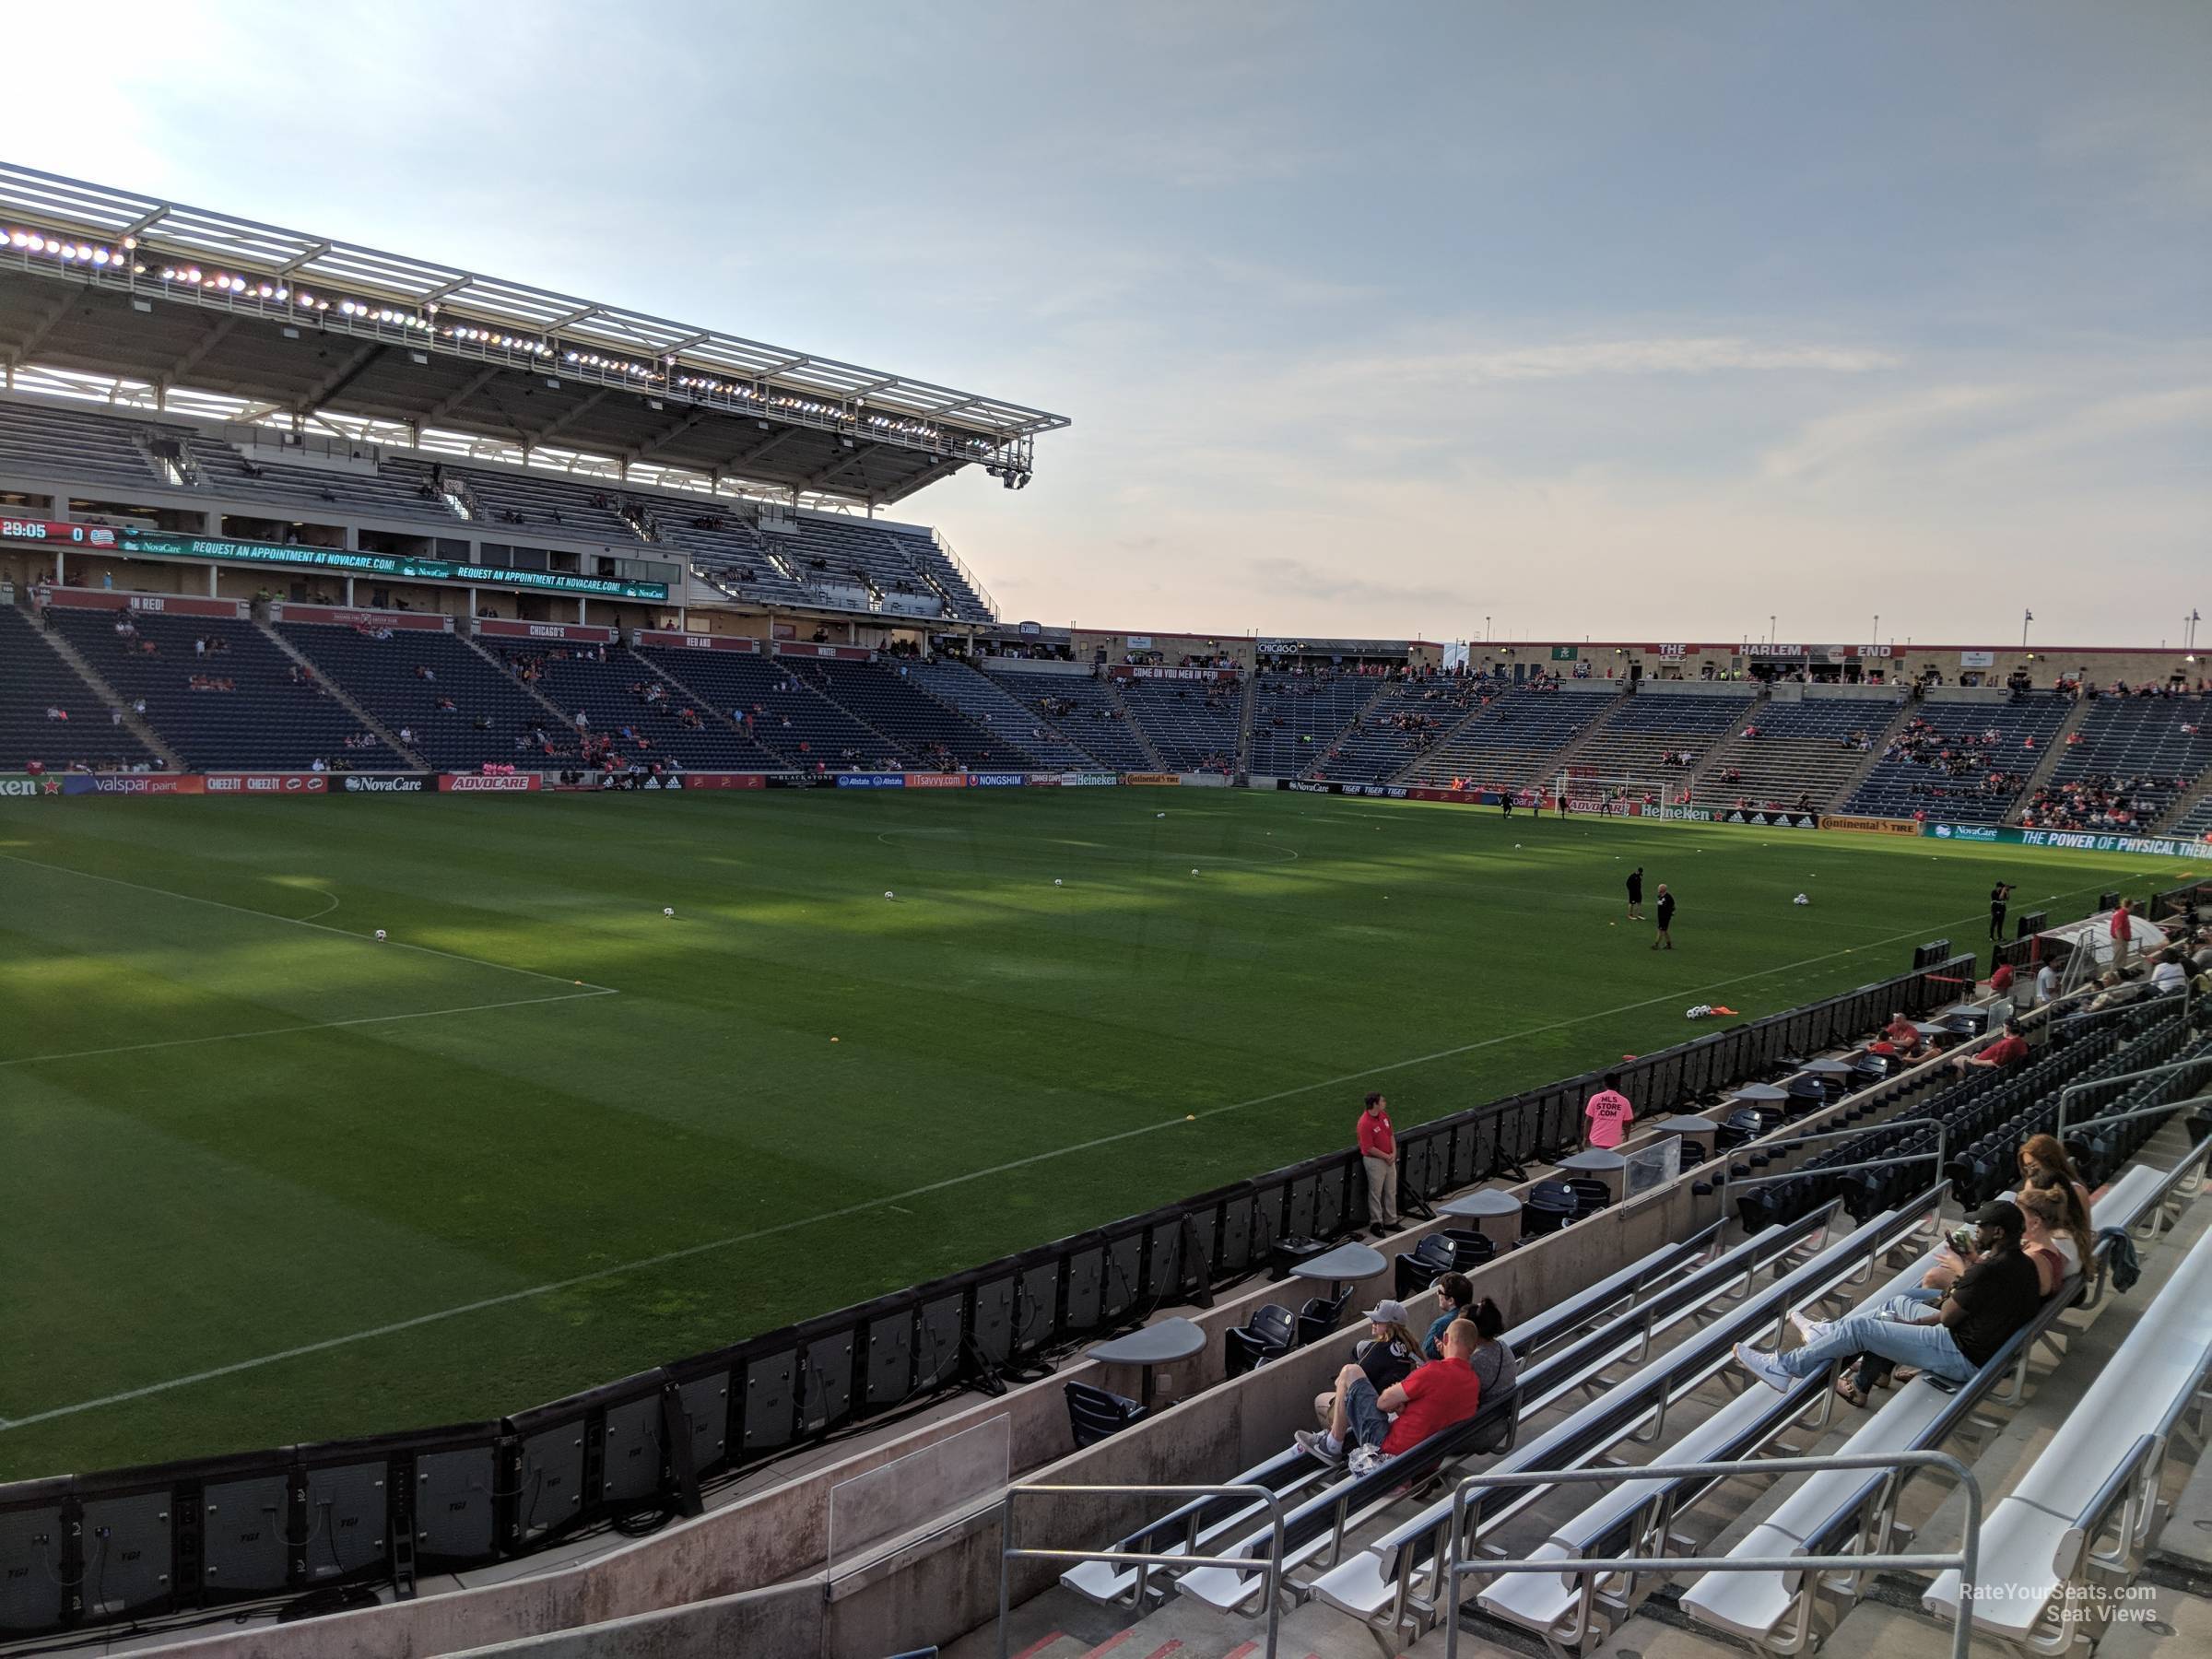 section 133, row 13 seat view  - seatgeek stadium